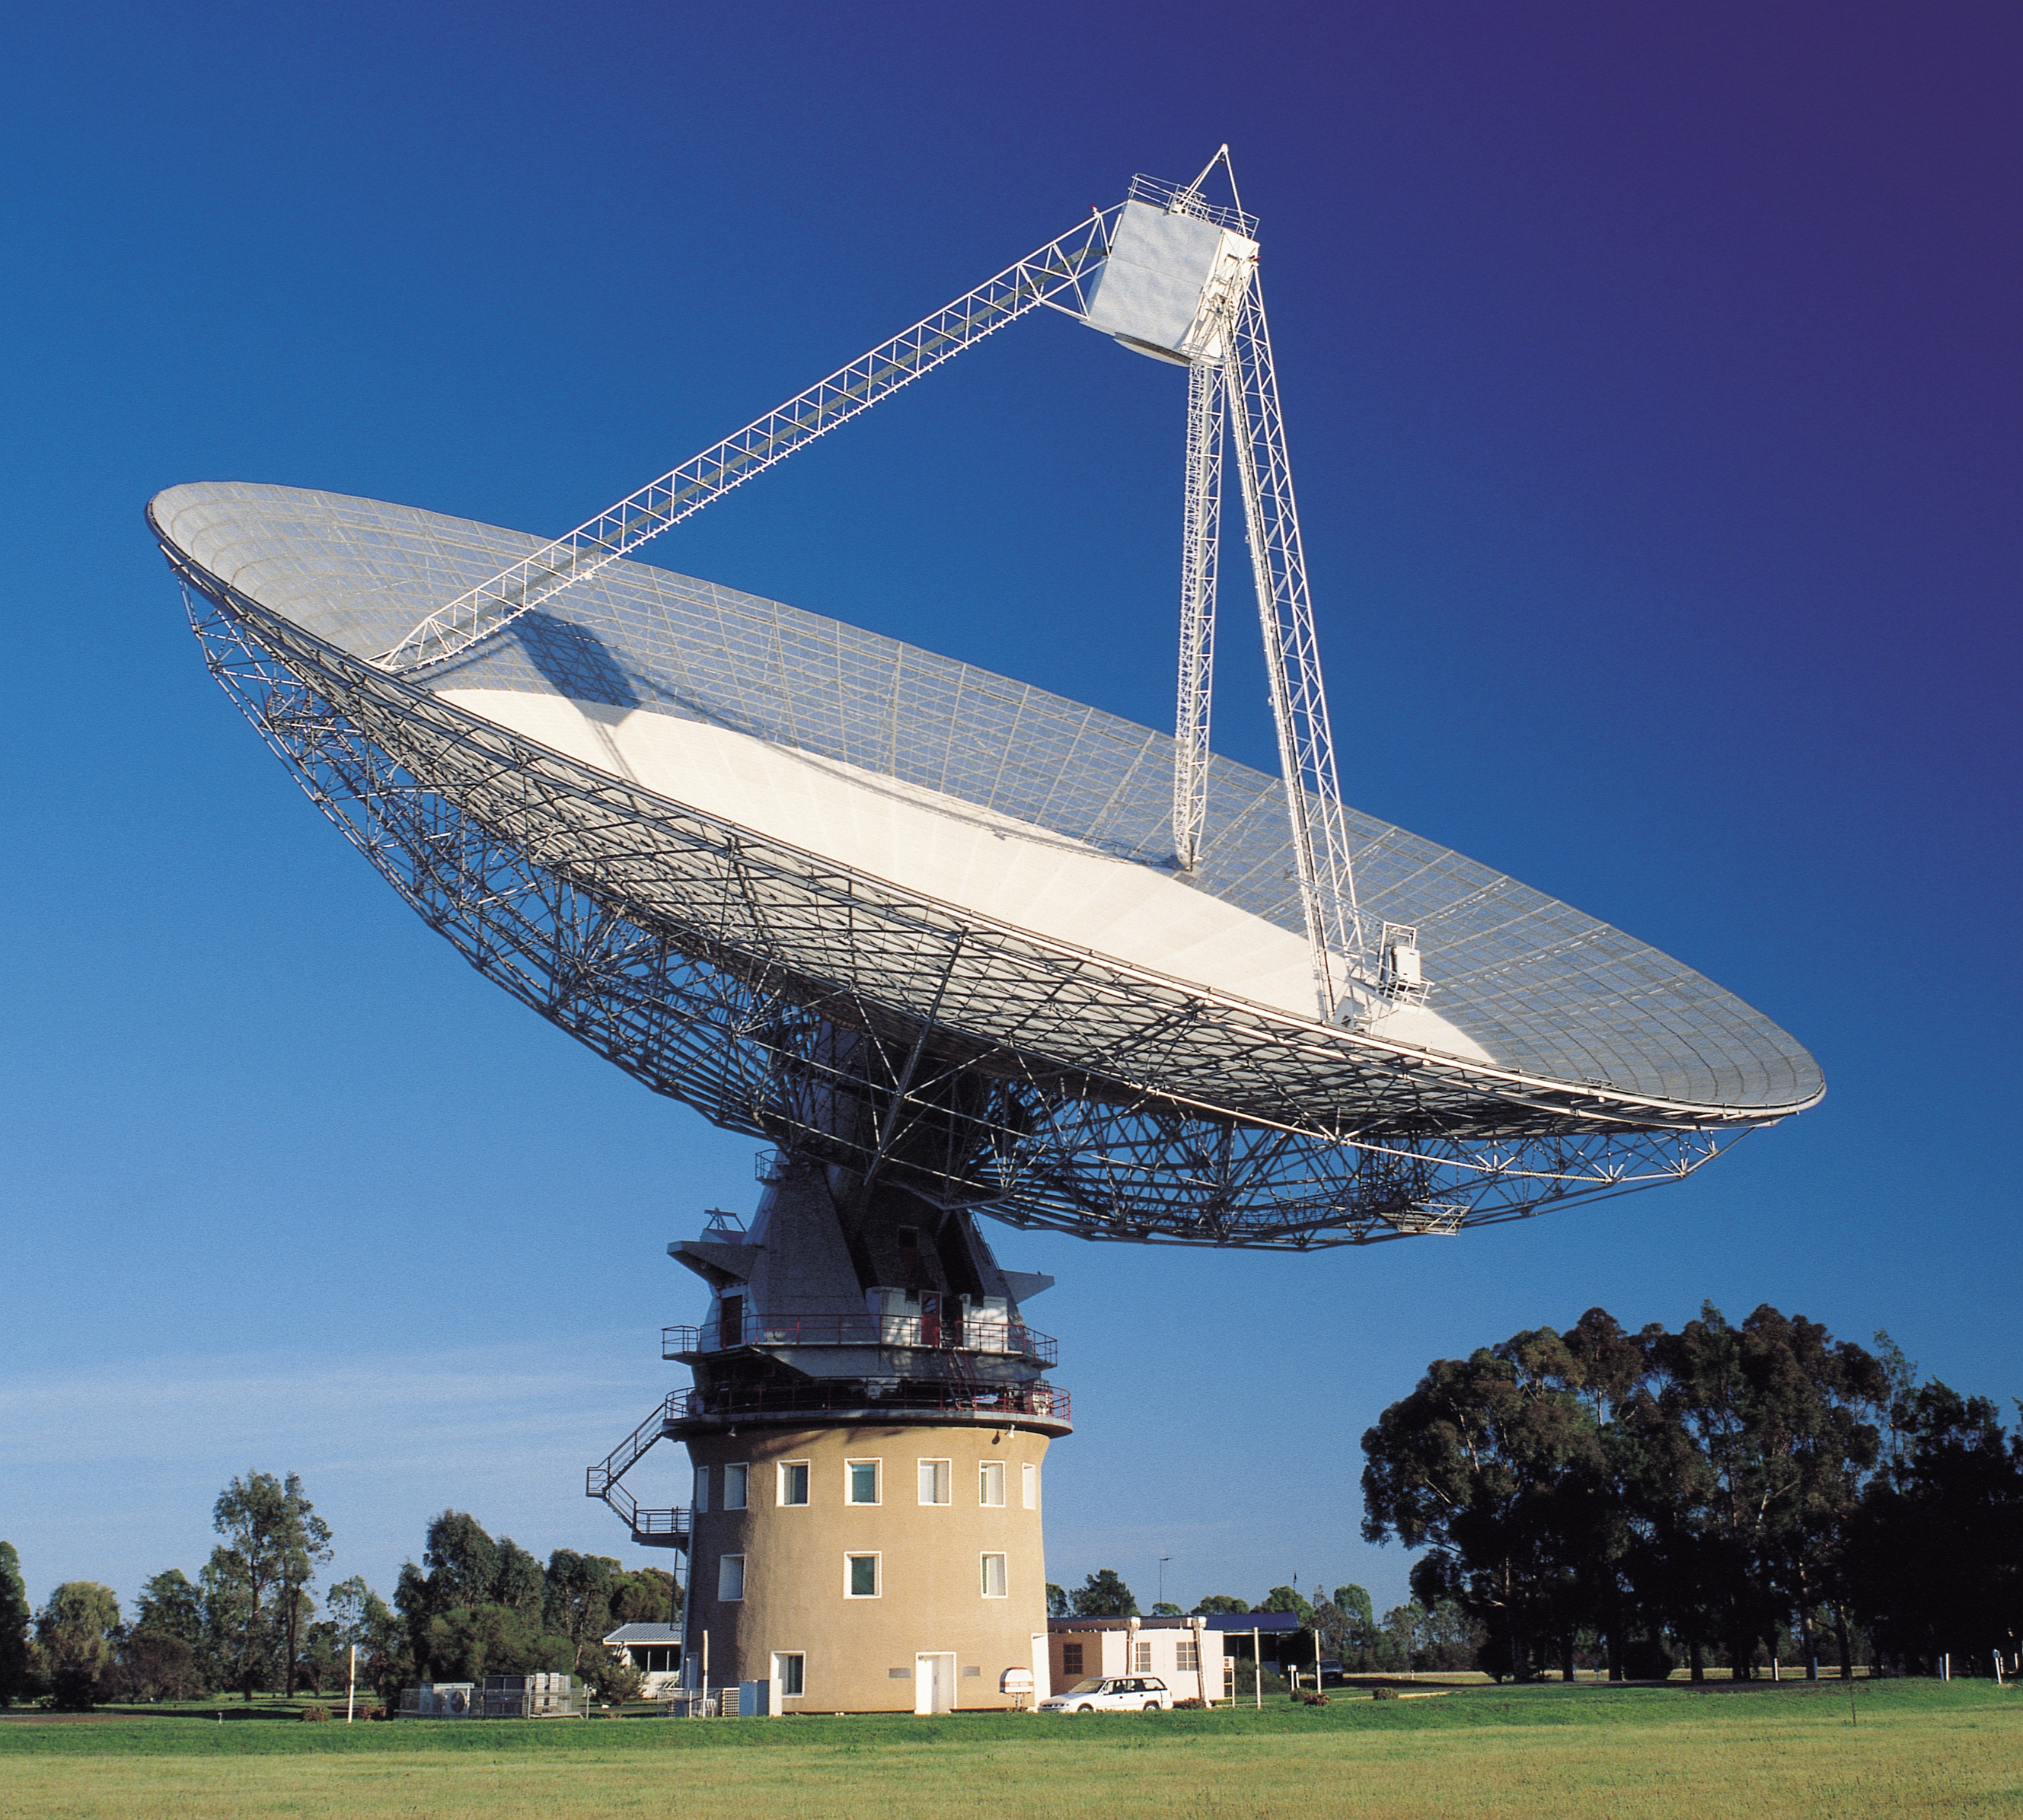 https://upload.wikimedia.org/wikipedia/commons/c/c3/CSIRO_ScienceImage_8220_The_Radio_Telescope_at_Parkes.jpg